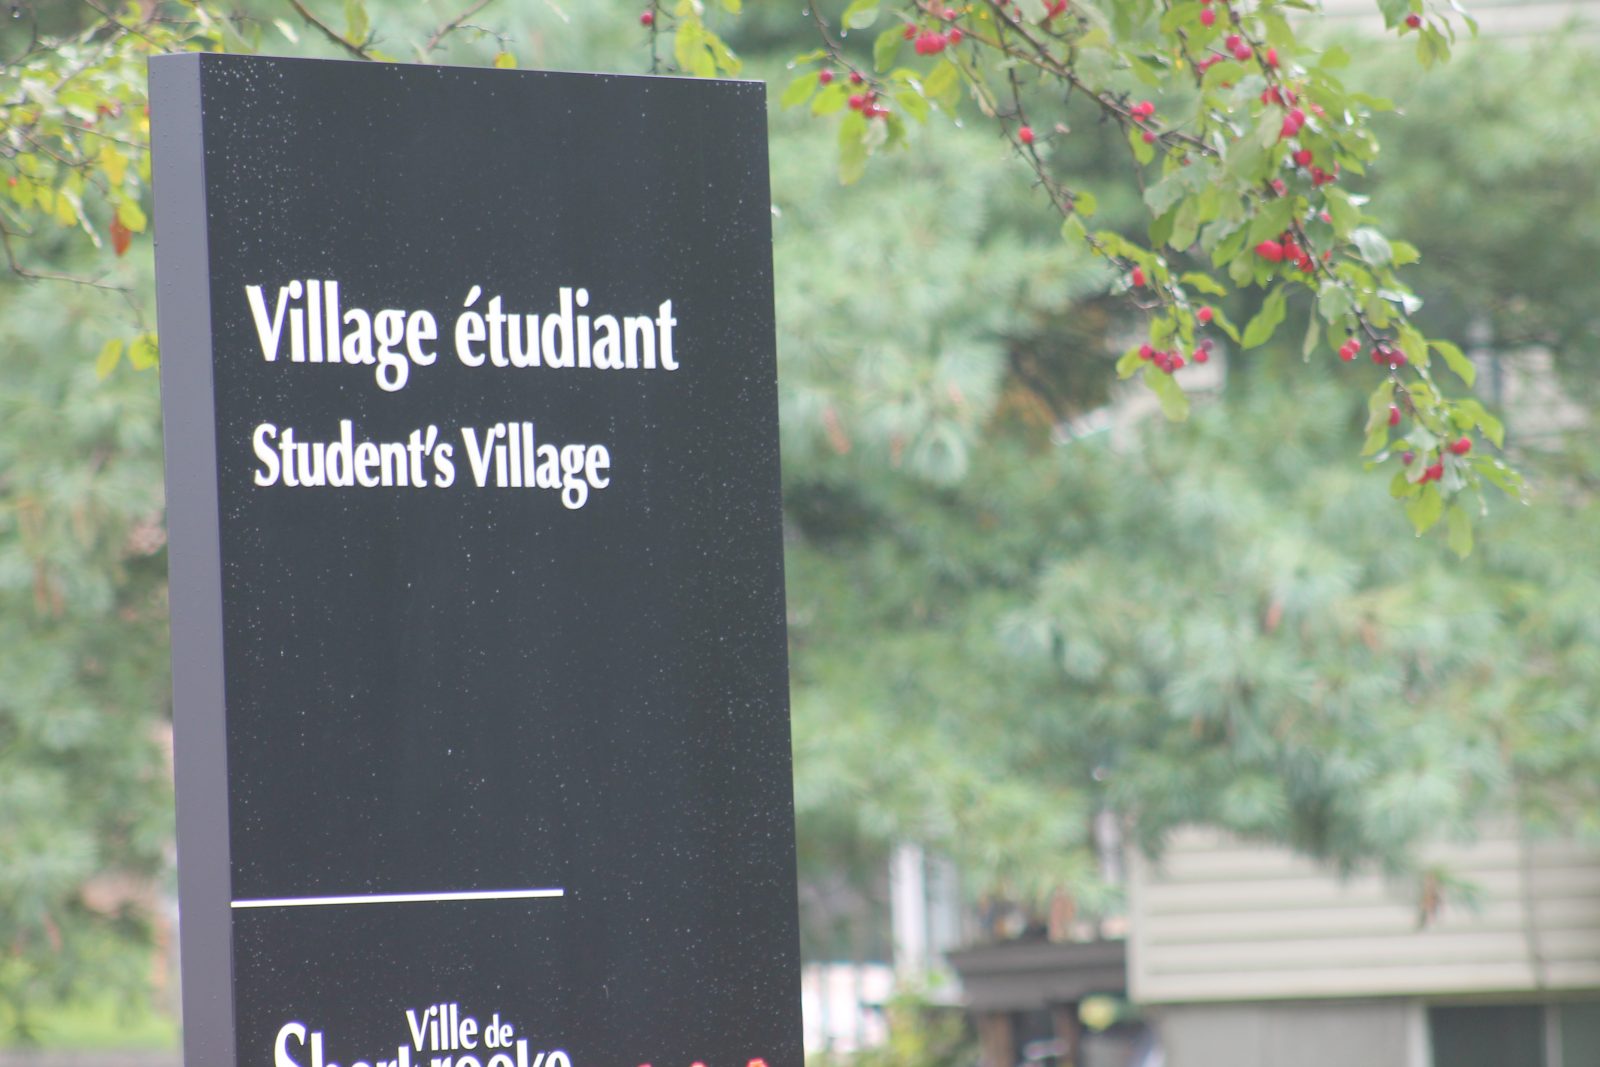 New Student Village sign raises questions